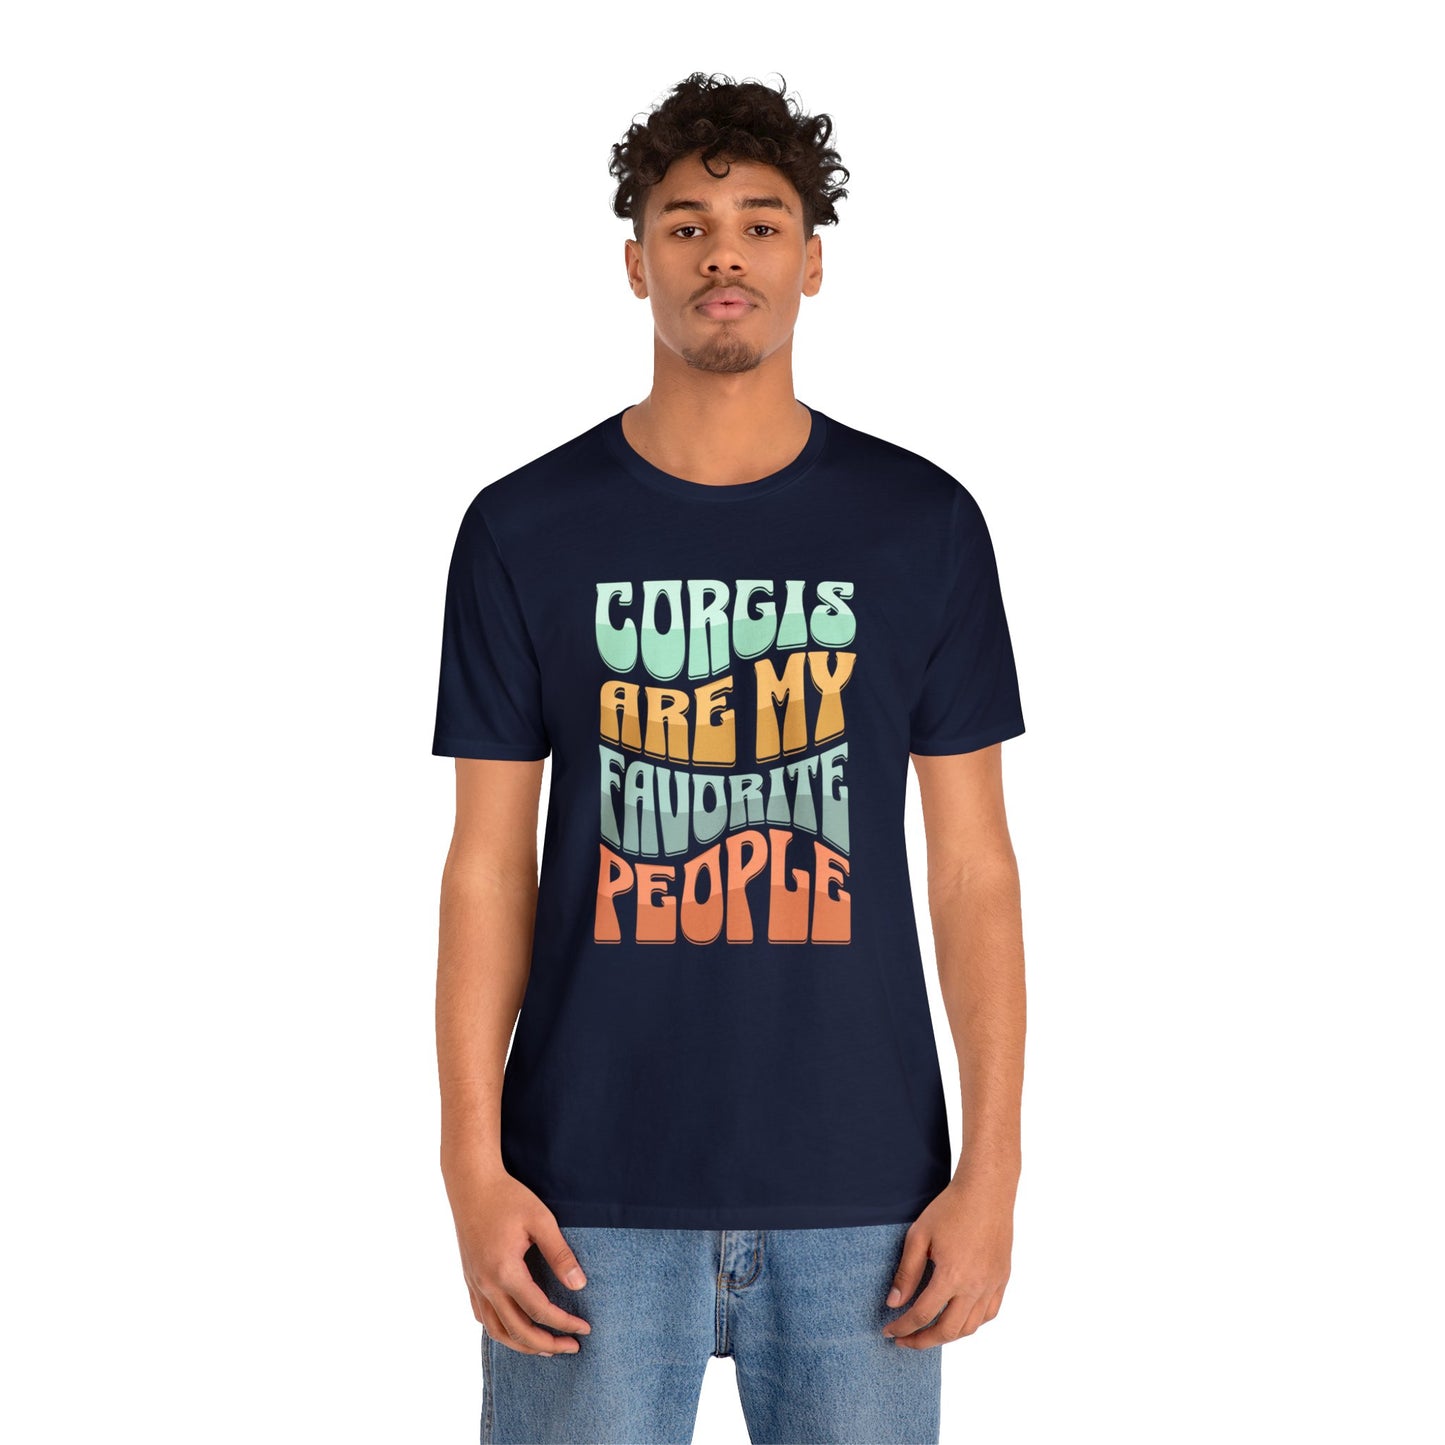 Corgi Funny Shirt - Corgis are my Favorite Shirt